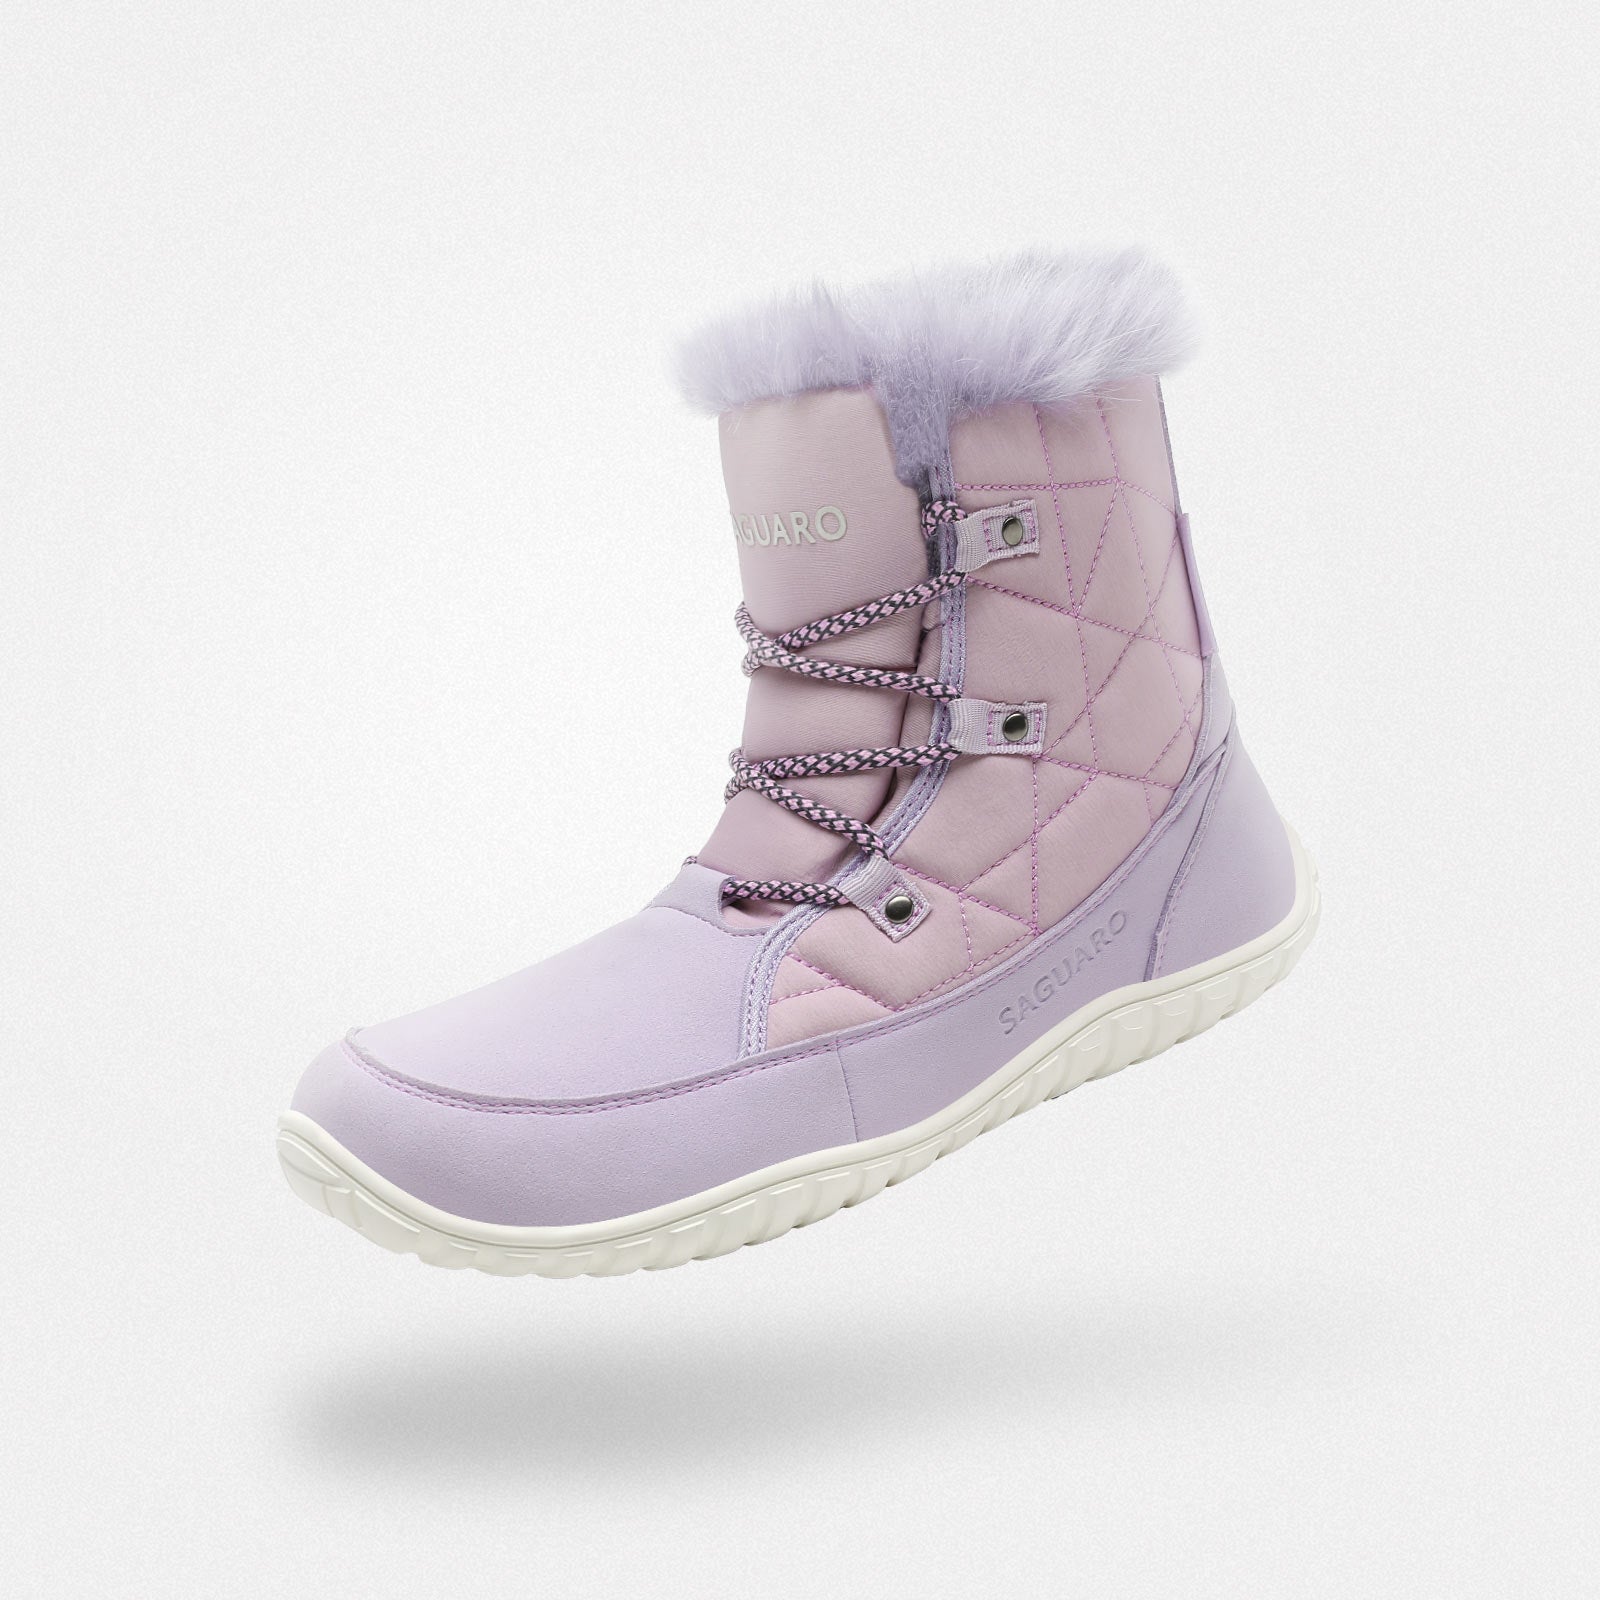 Rise I - Zapatos Barefoot de Invierno